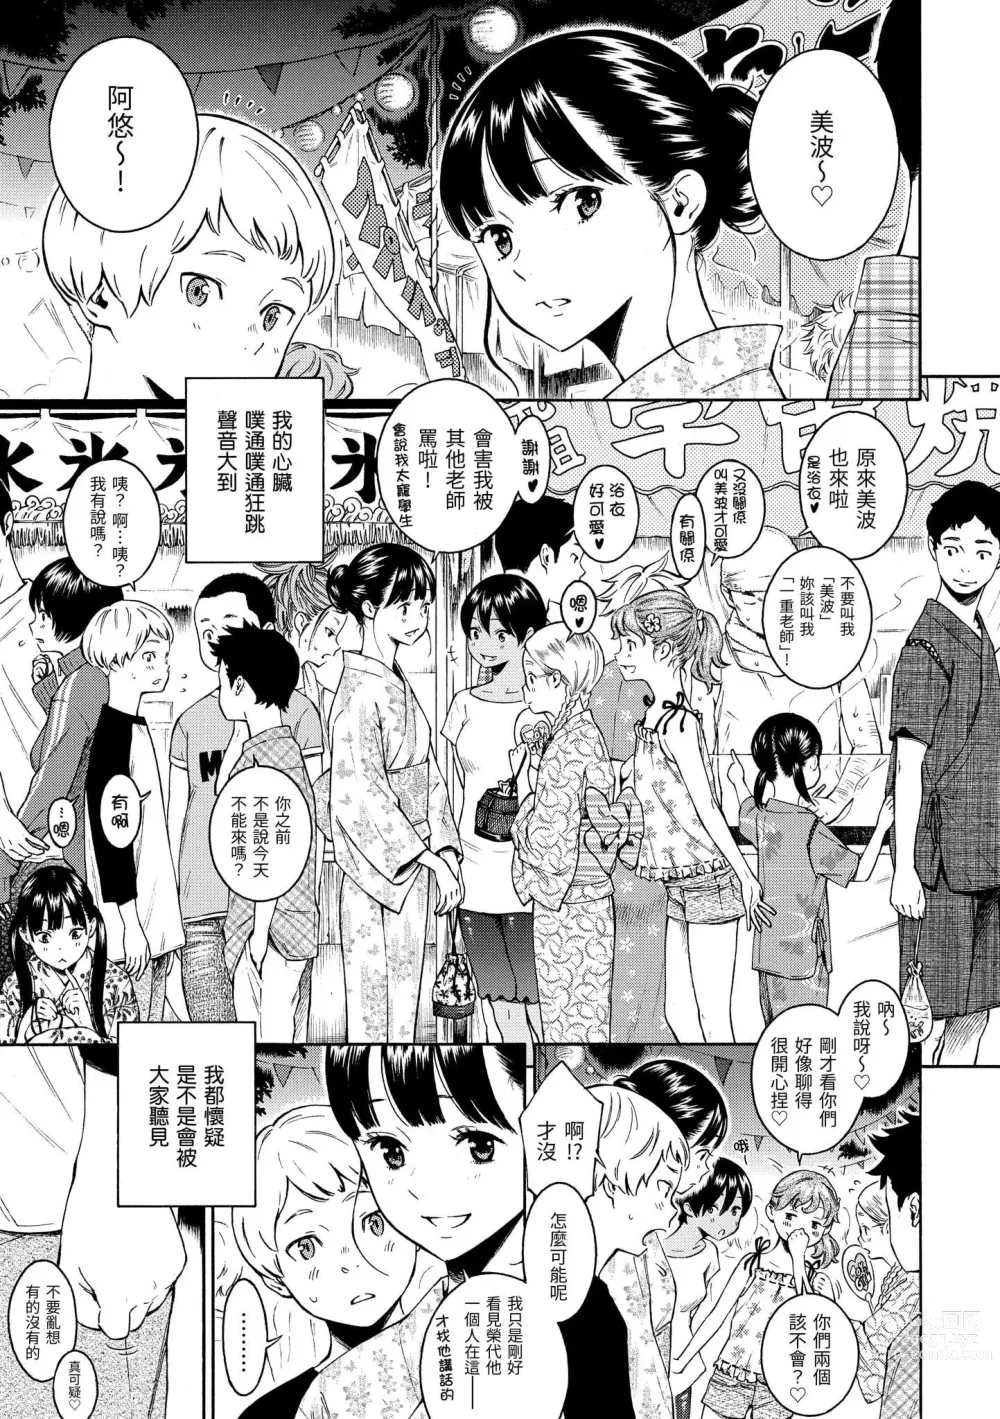 Page 6 of manga Gunjou Noise